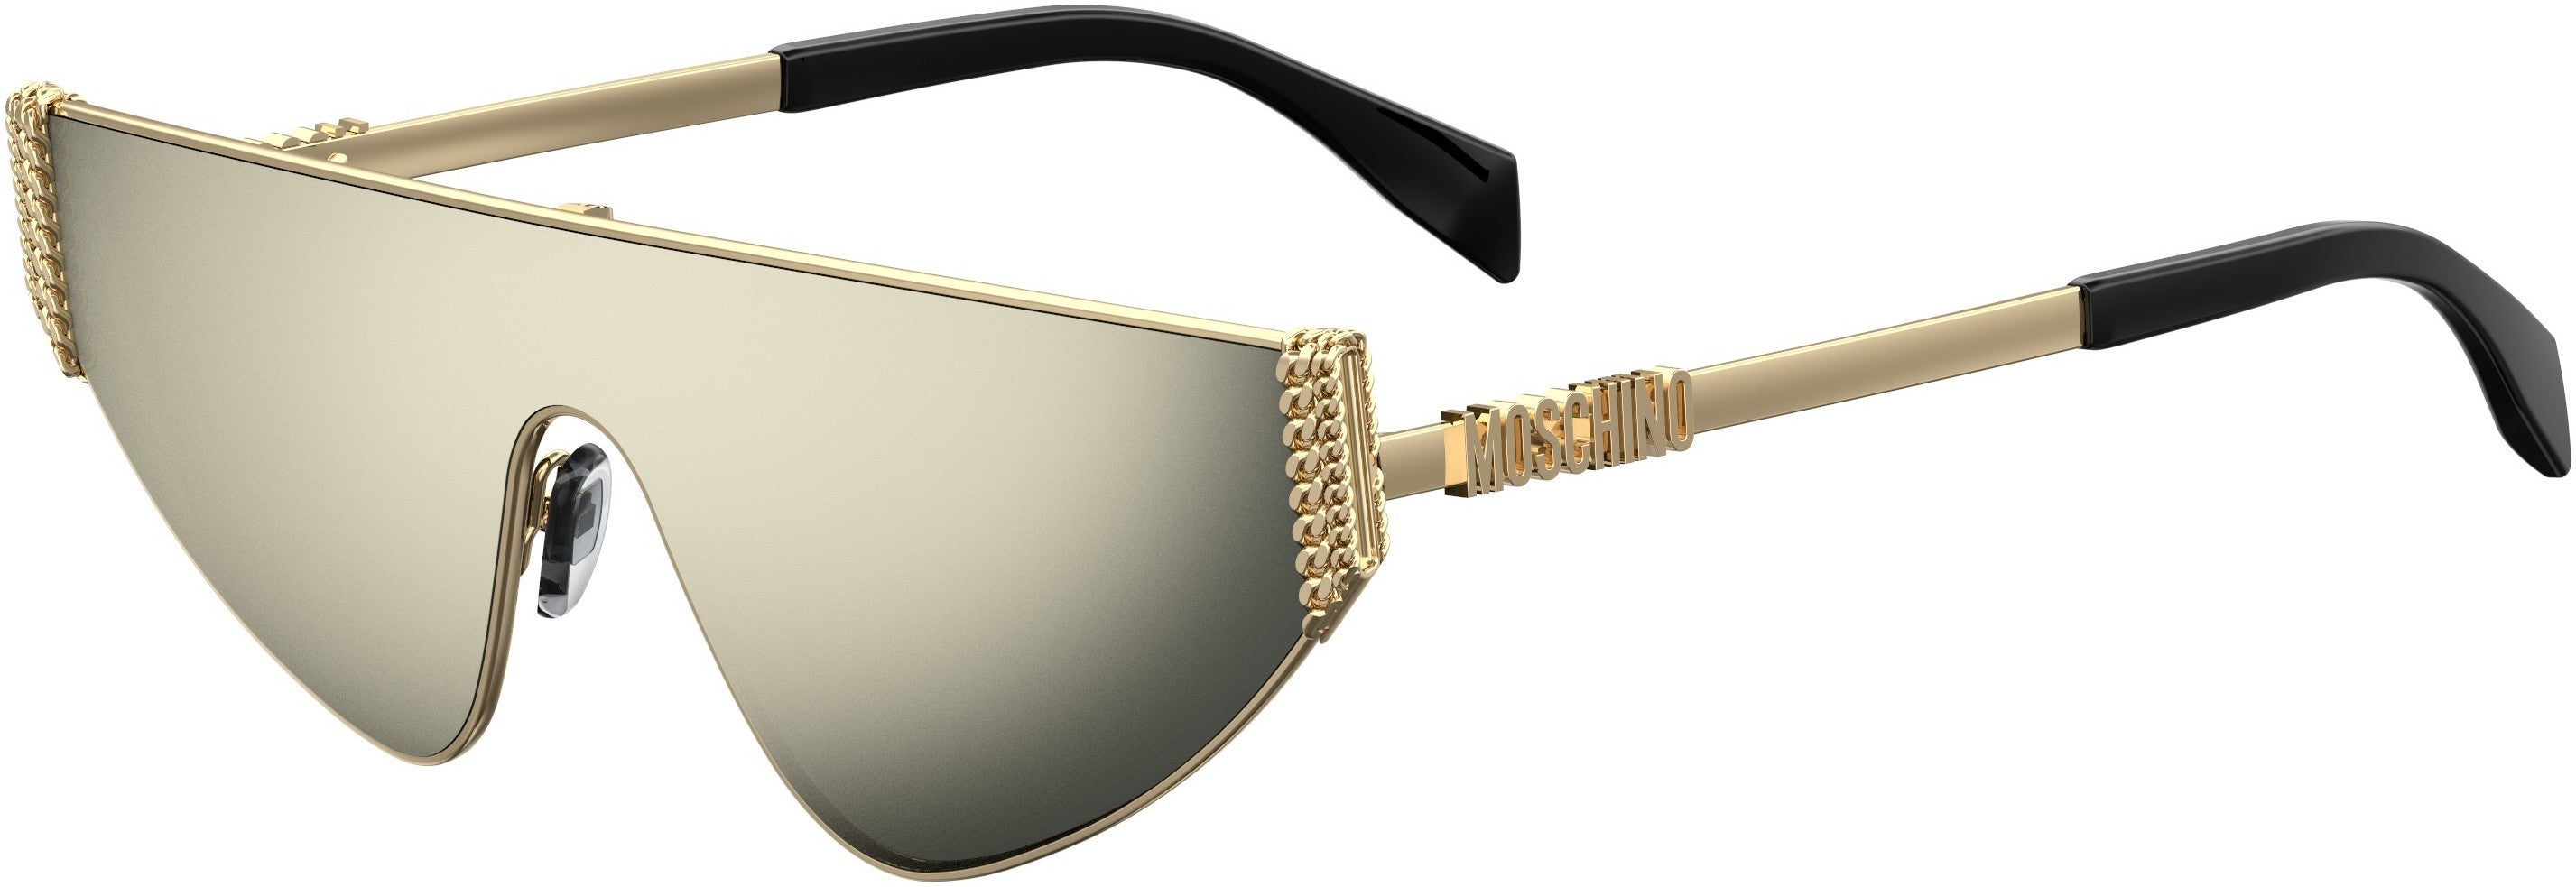  Moschino 022/S Special Shape Sunglasses 0J5G-0J5G  Gold (UE Ivory Multilaye)